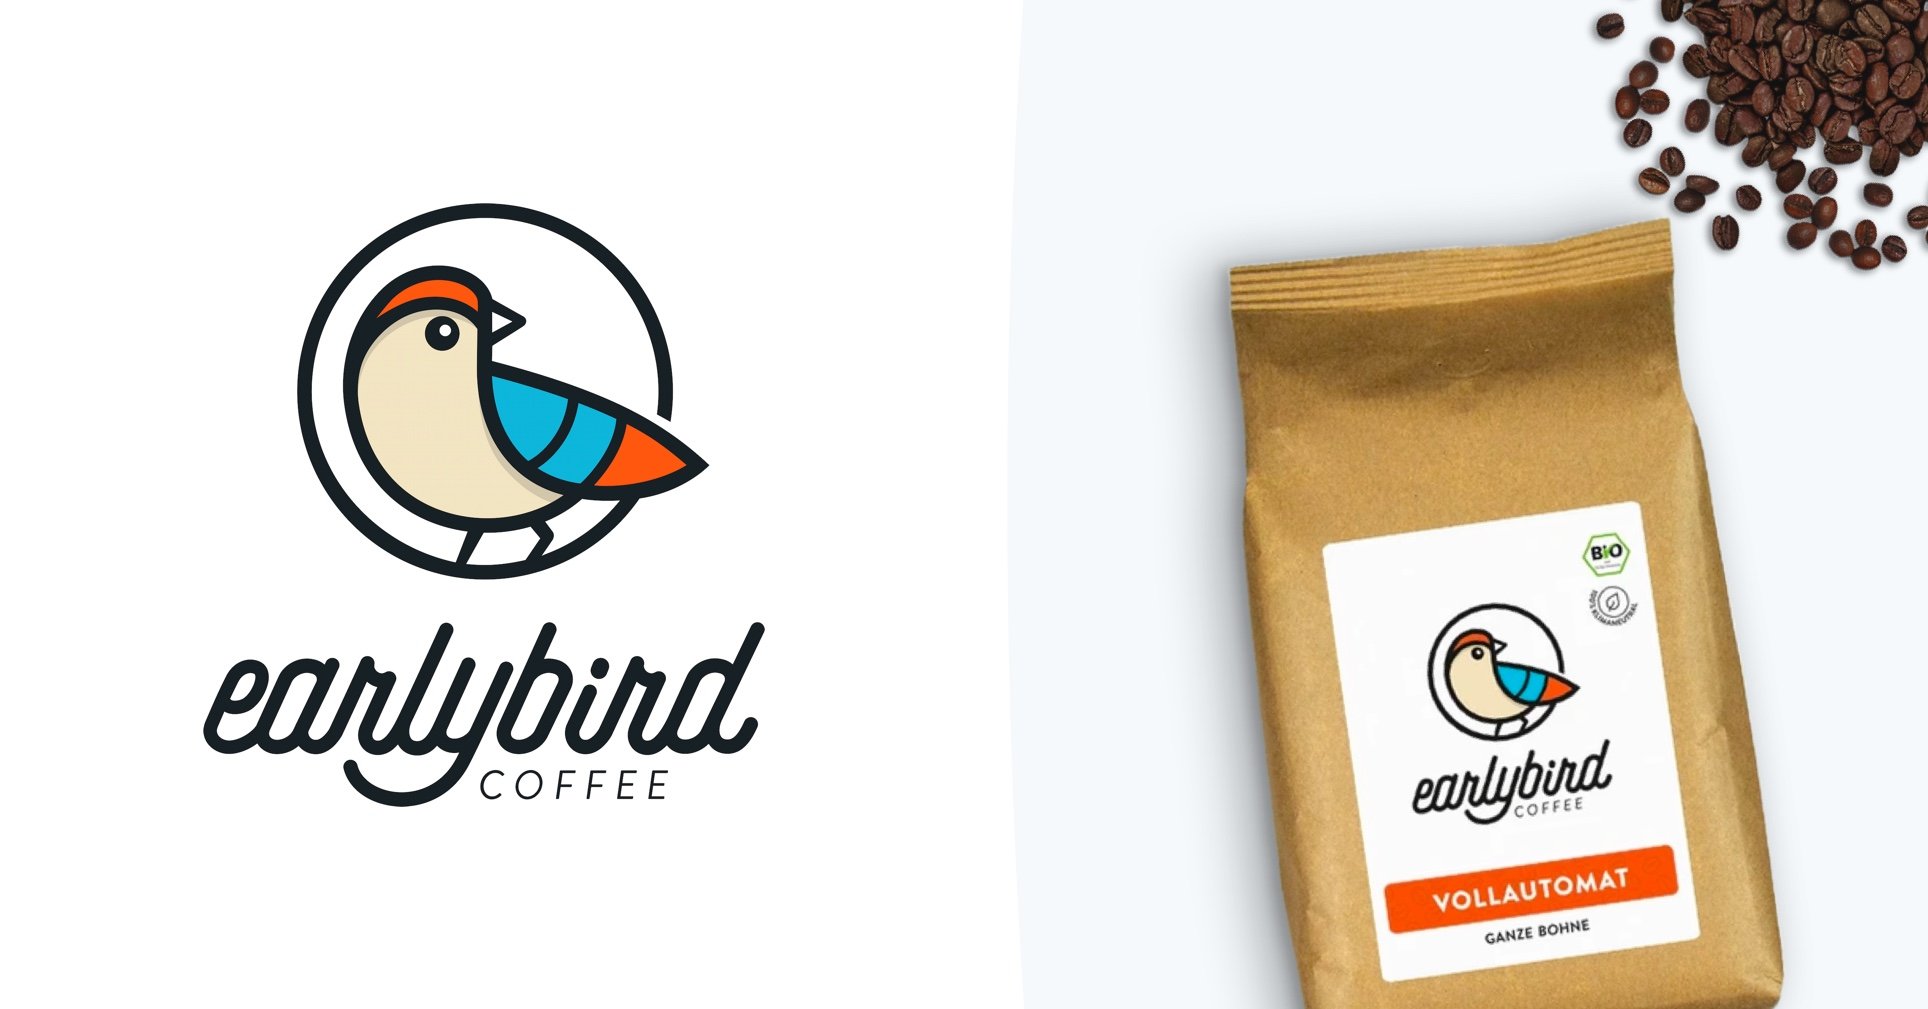 (c) Earlybird-coffee.de